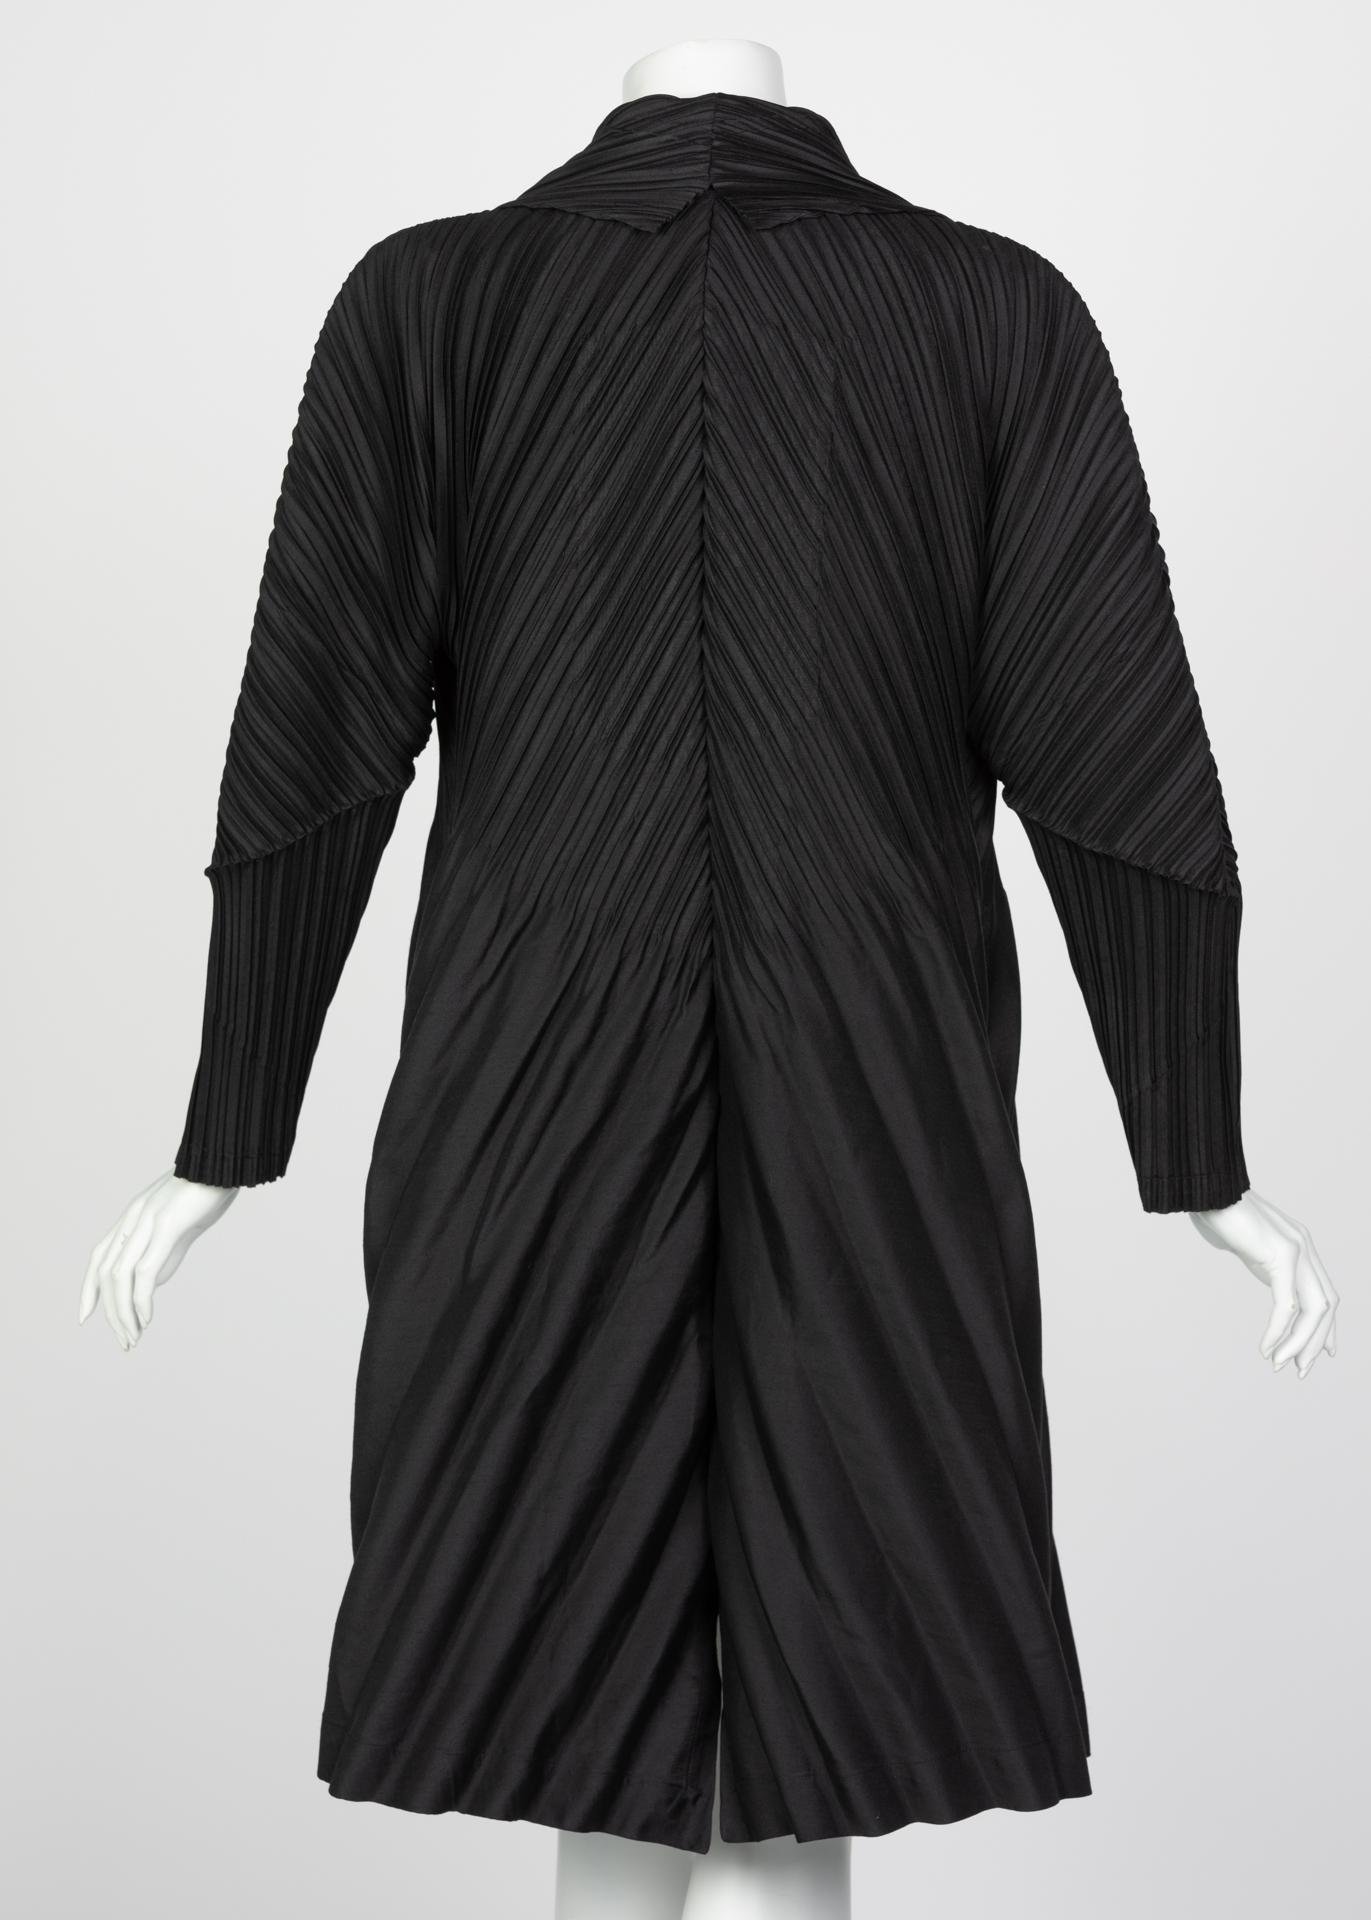 Issey Miyake Vintage Black Sculptural Pleated Cocoon Coat For Sale 2